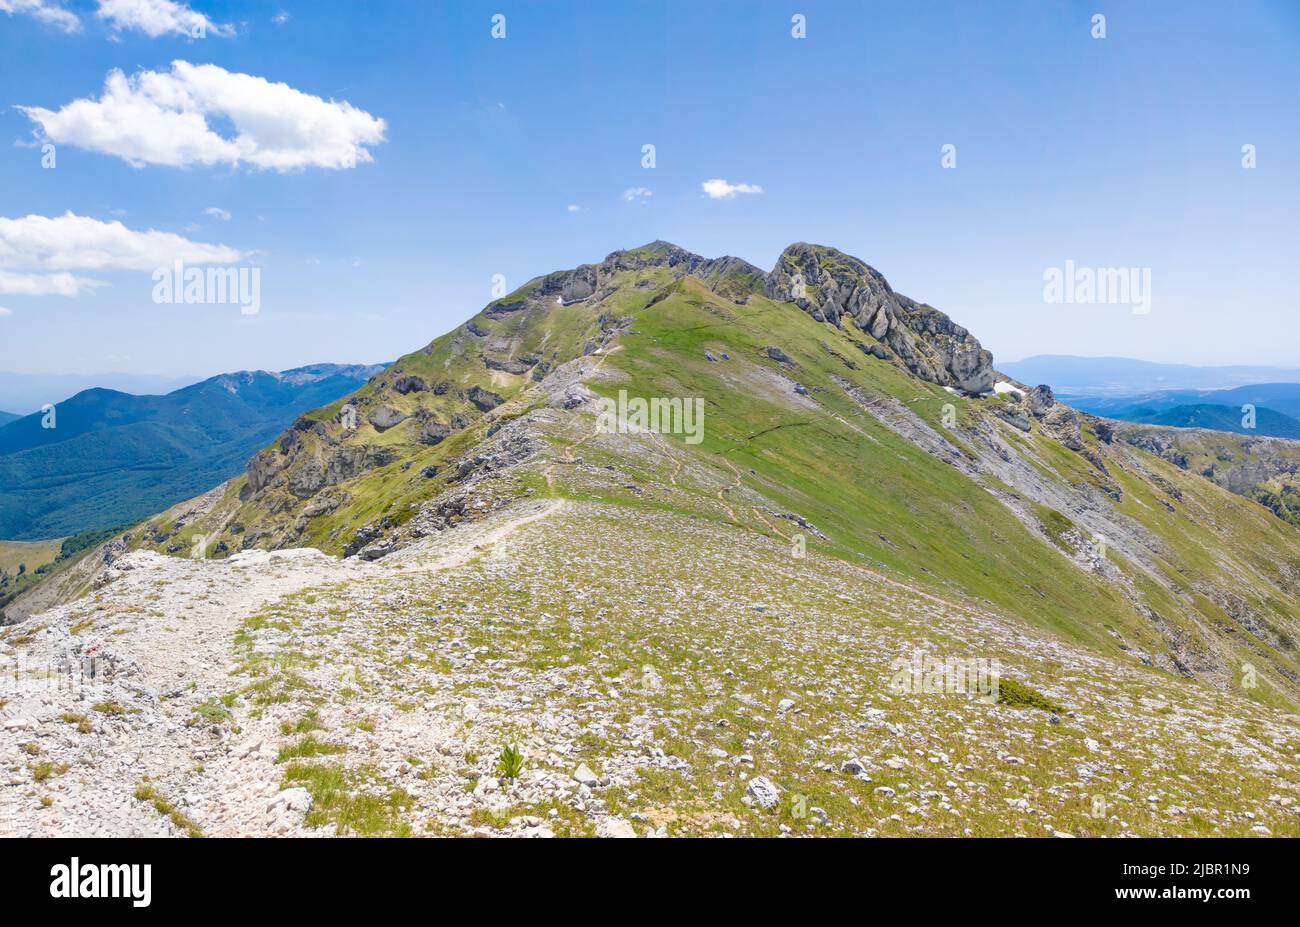 Mount Viglio (Frosinone, Italy) - In Monti Cantari mountain range, the Monte Viglio is one of three hightest peak in Lazio region. Here in the spring. Stock Photo